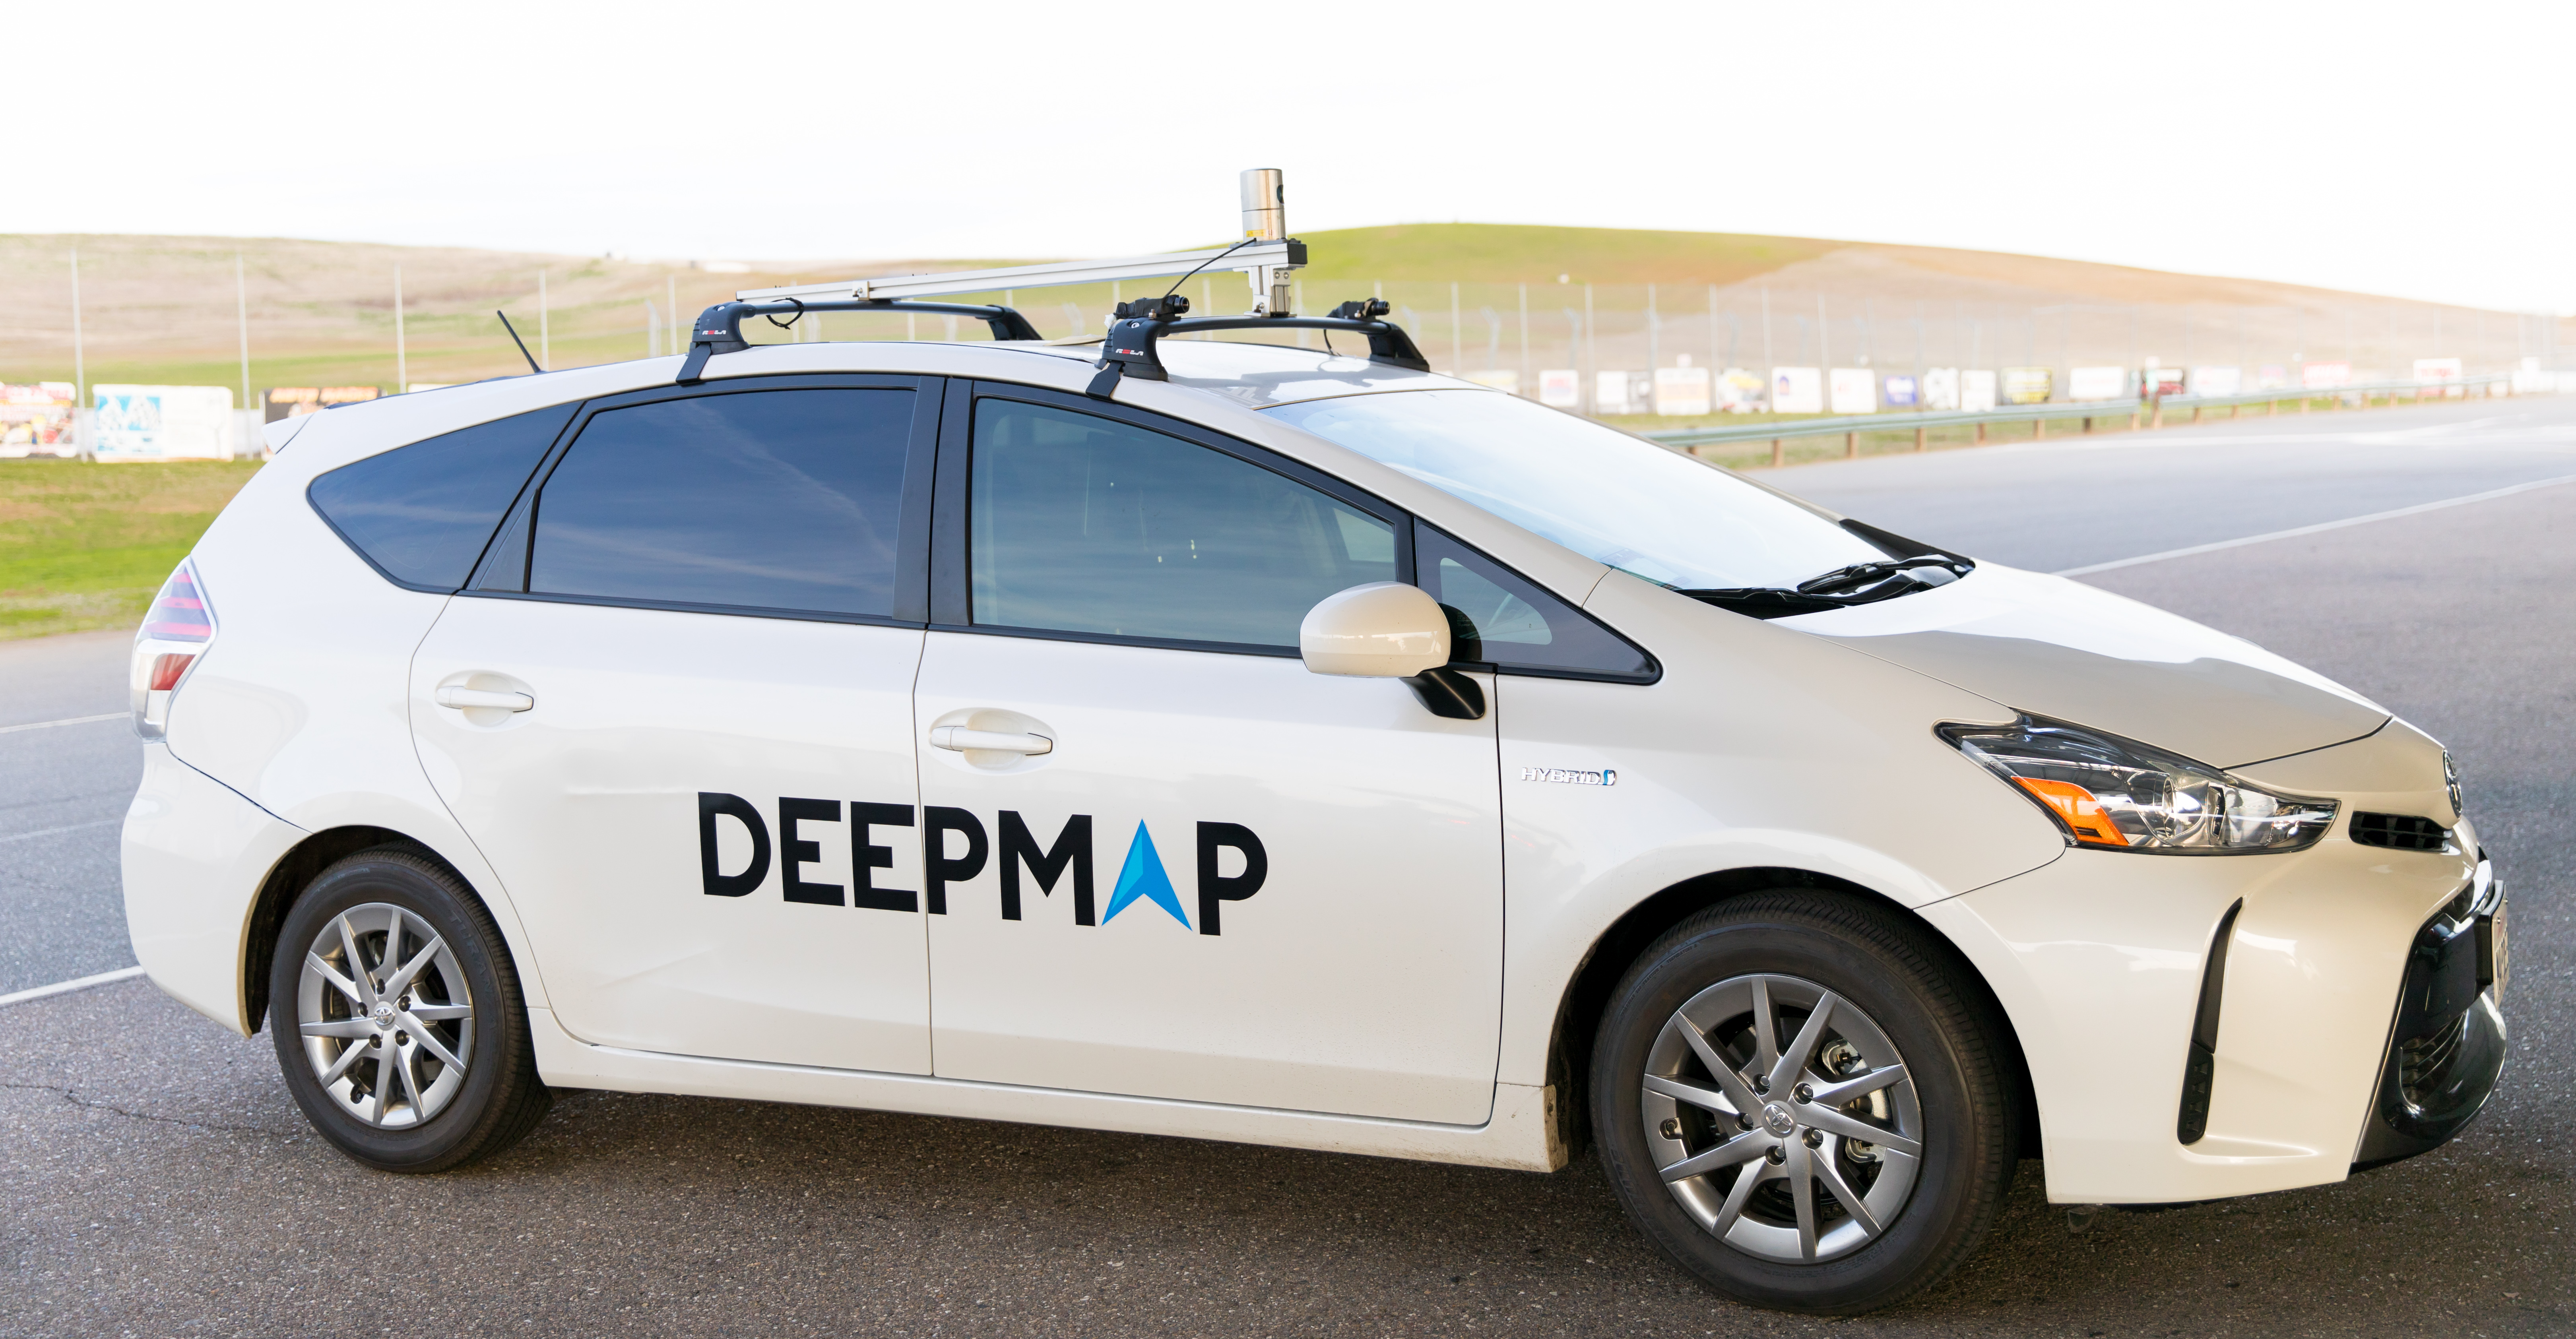 A Deepmap Mapping Vehicle